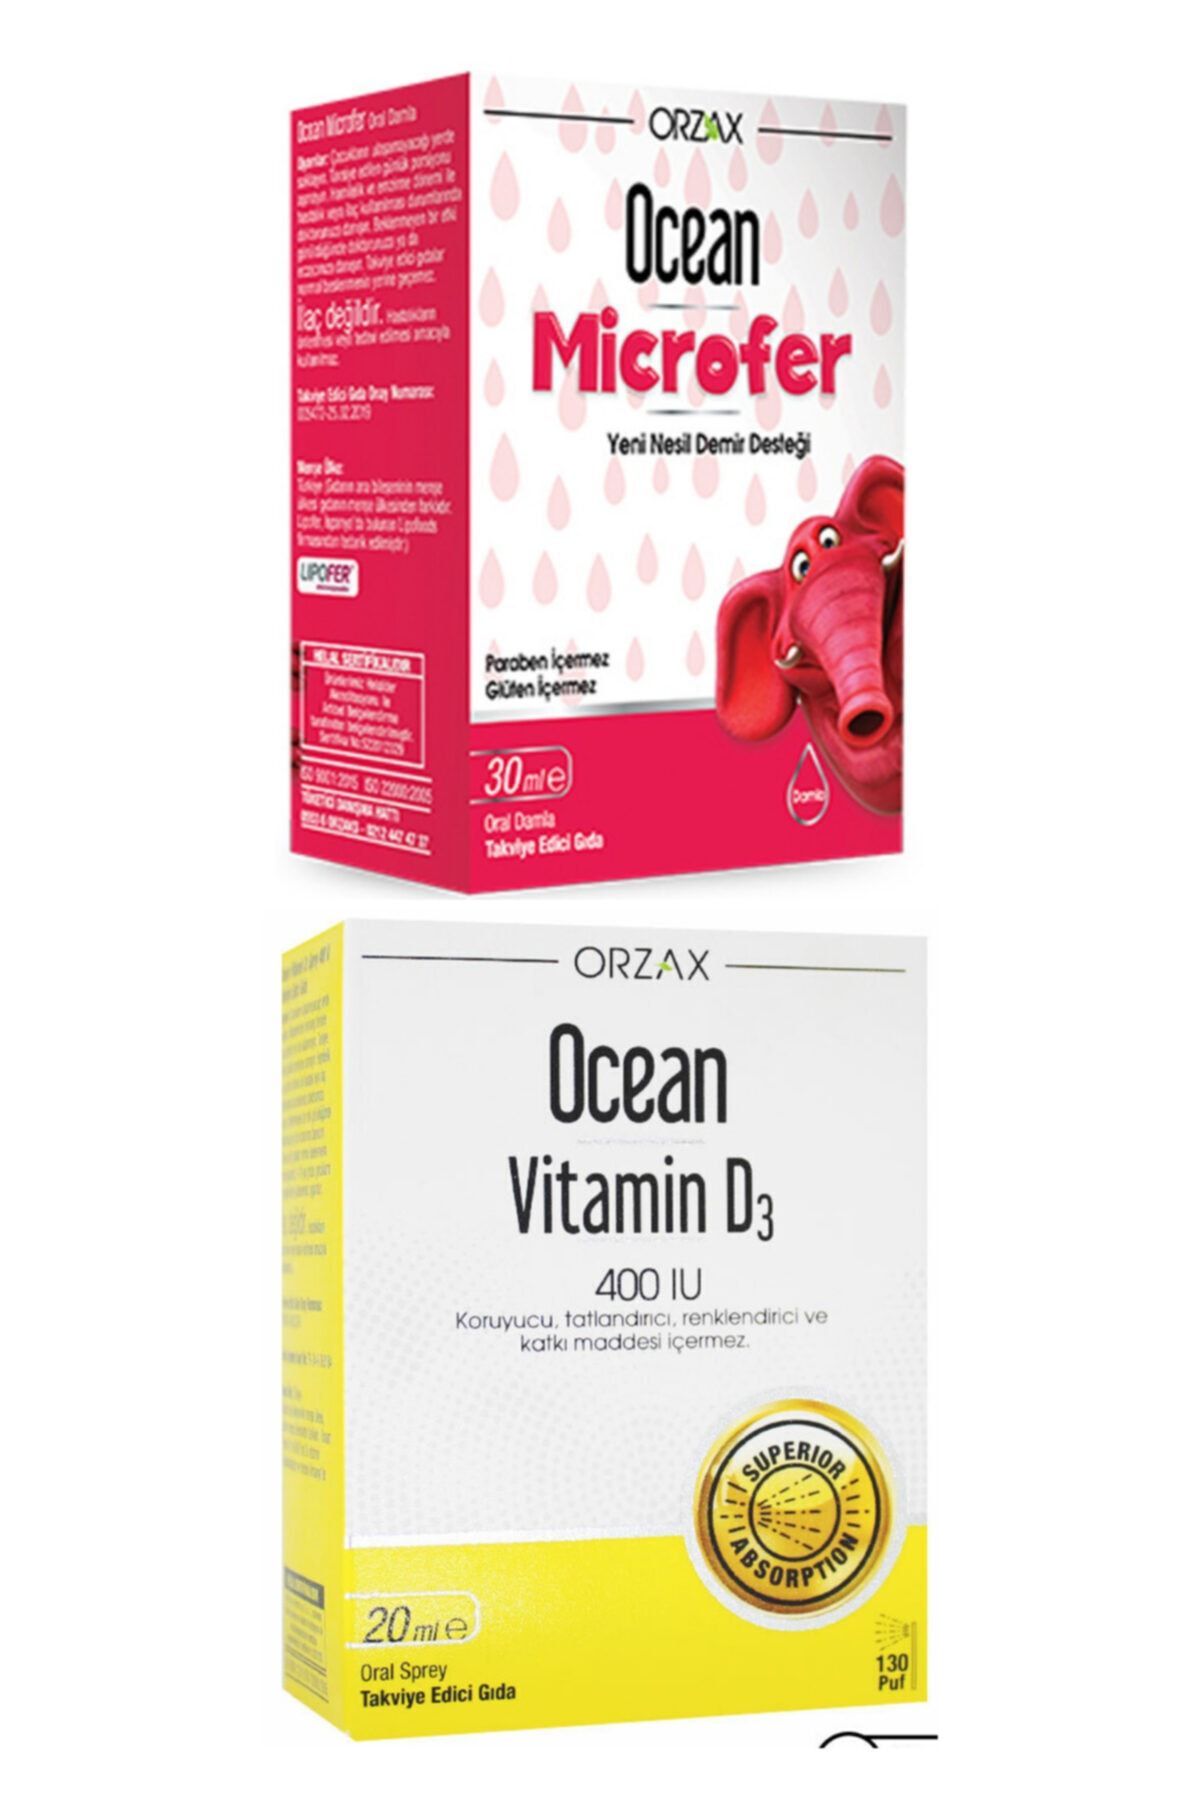 Ocean Ocean Microfer Oral Damla 30 ml + Ocean Vitamin D3 400ıu Sprey 20 ml